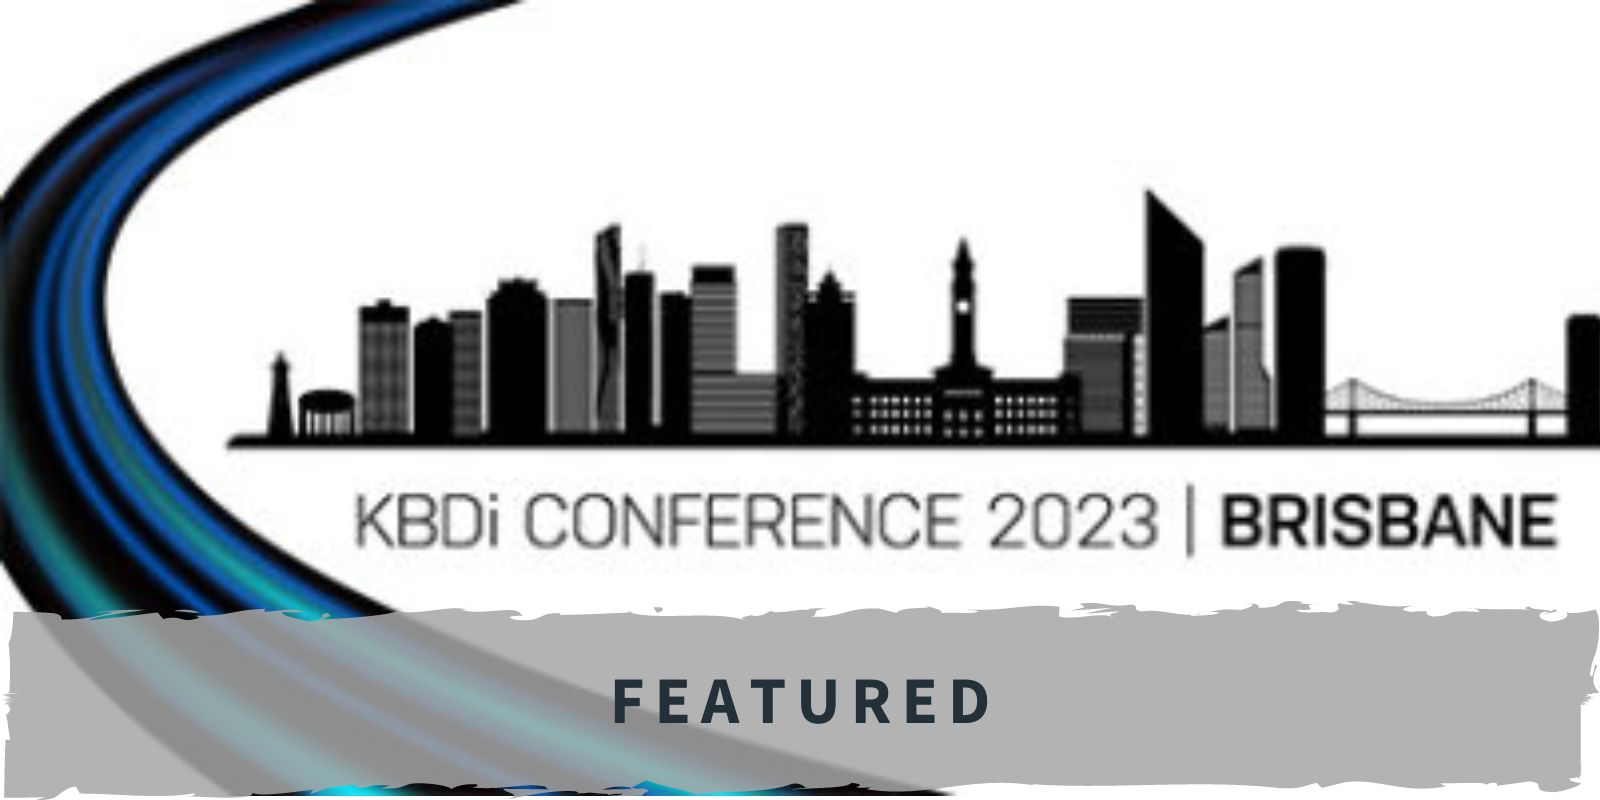 KBDi Conference 2023